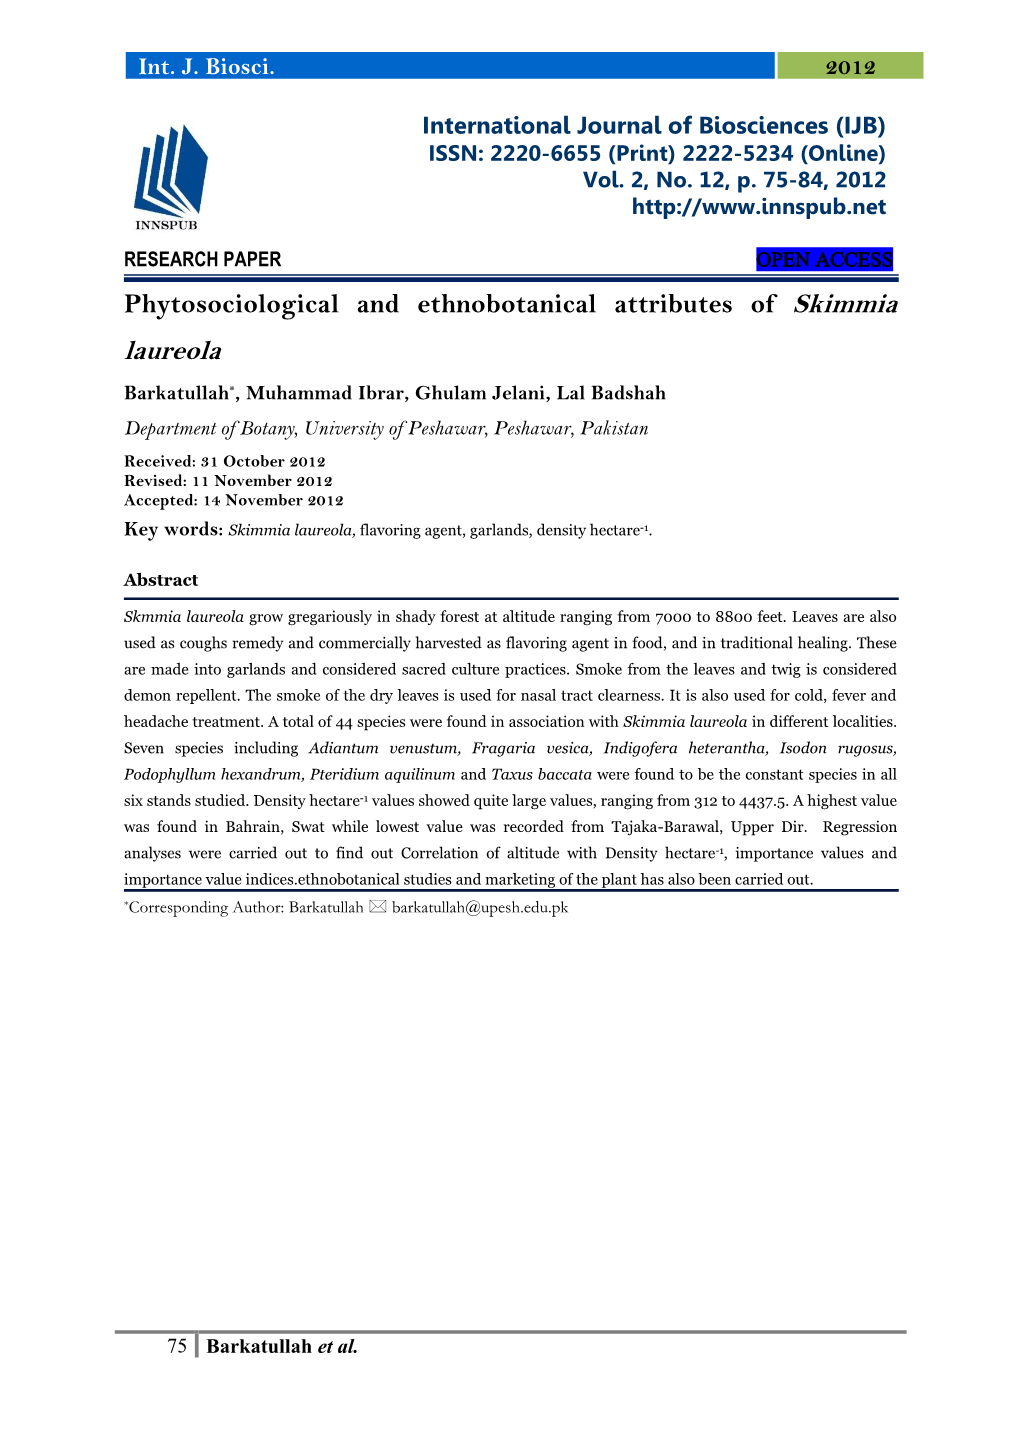 Phytosociological and Ethnobotanical Attributes of Skimmia